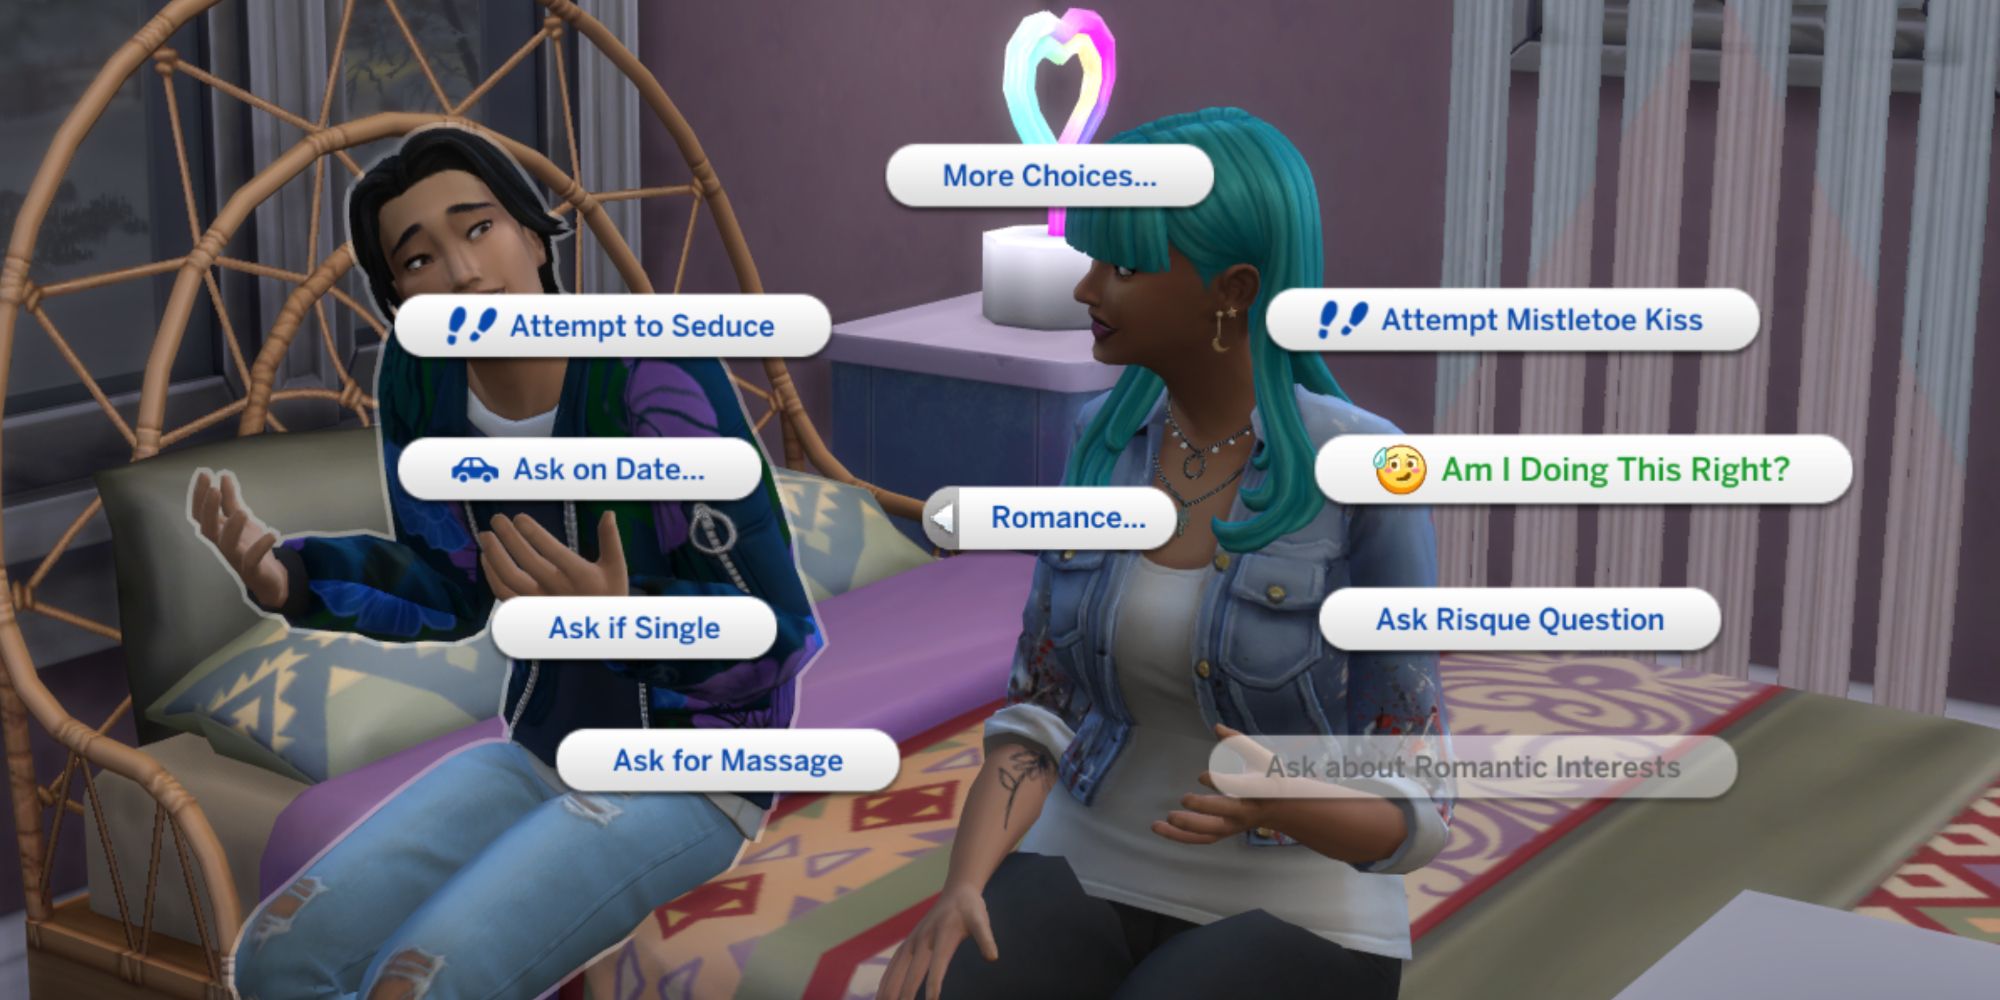 Sims 4 - Socially Awkward Sim asking Am I Doing This Right